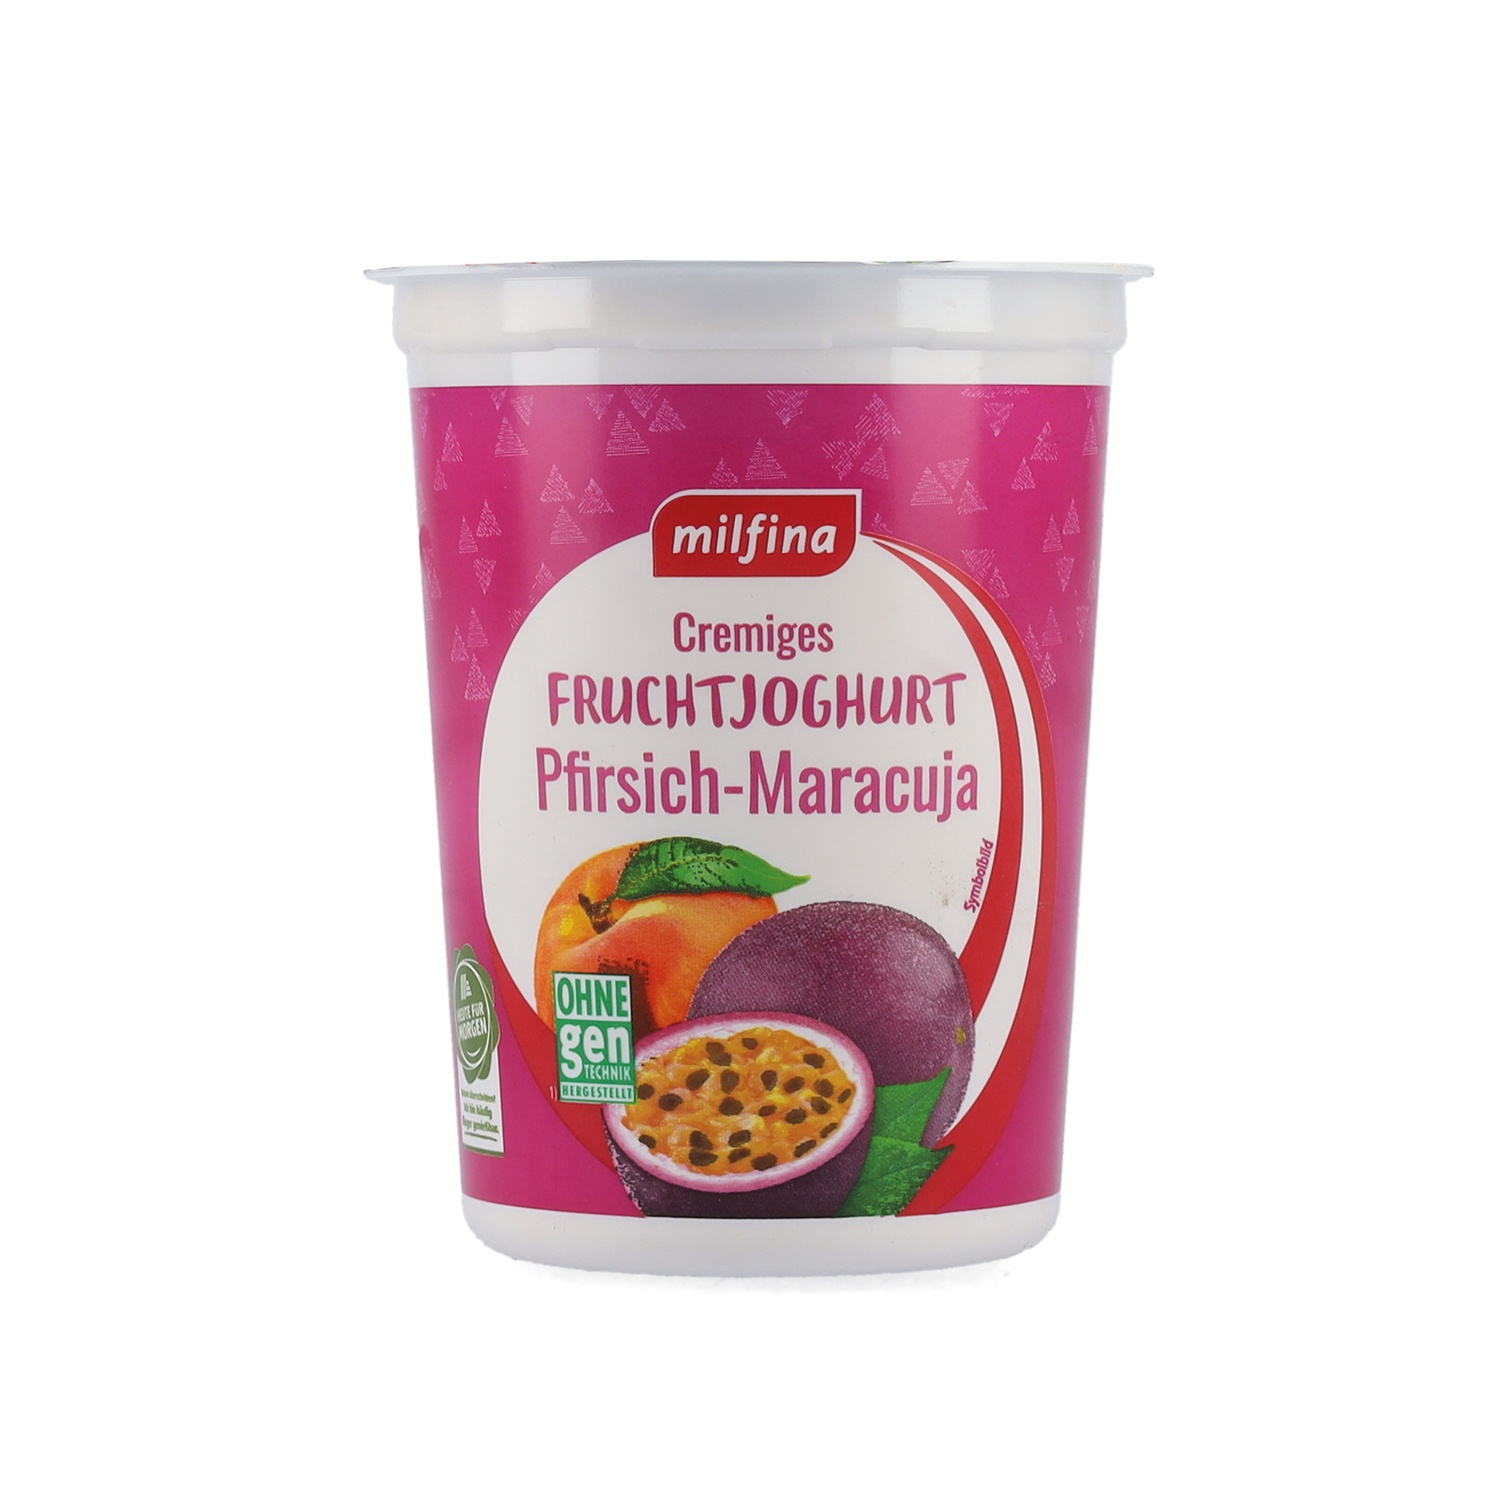 MILFINA Fruchtjoghurt, Pfirsich-Maracuja